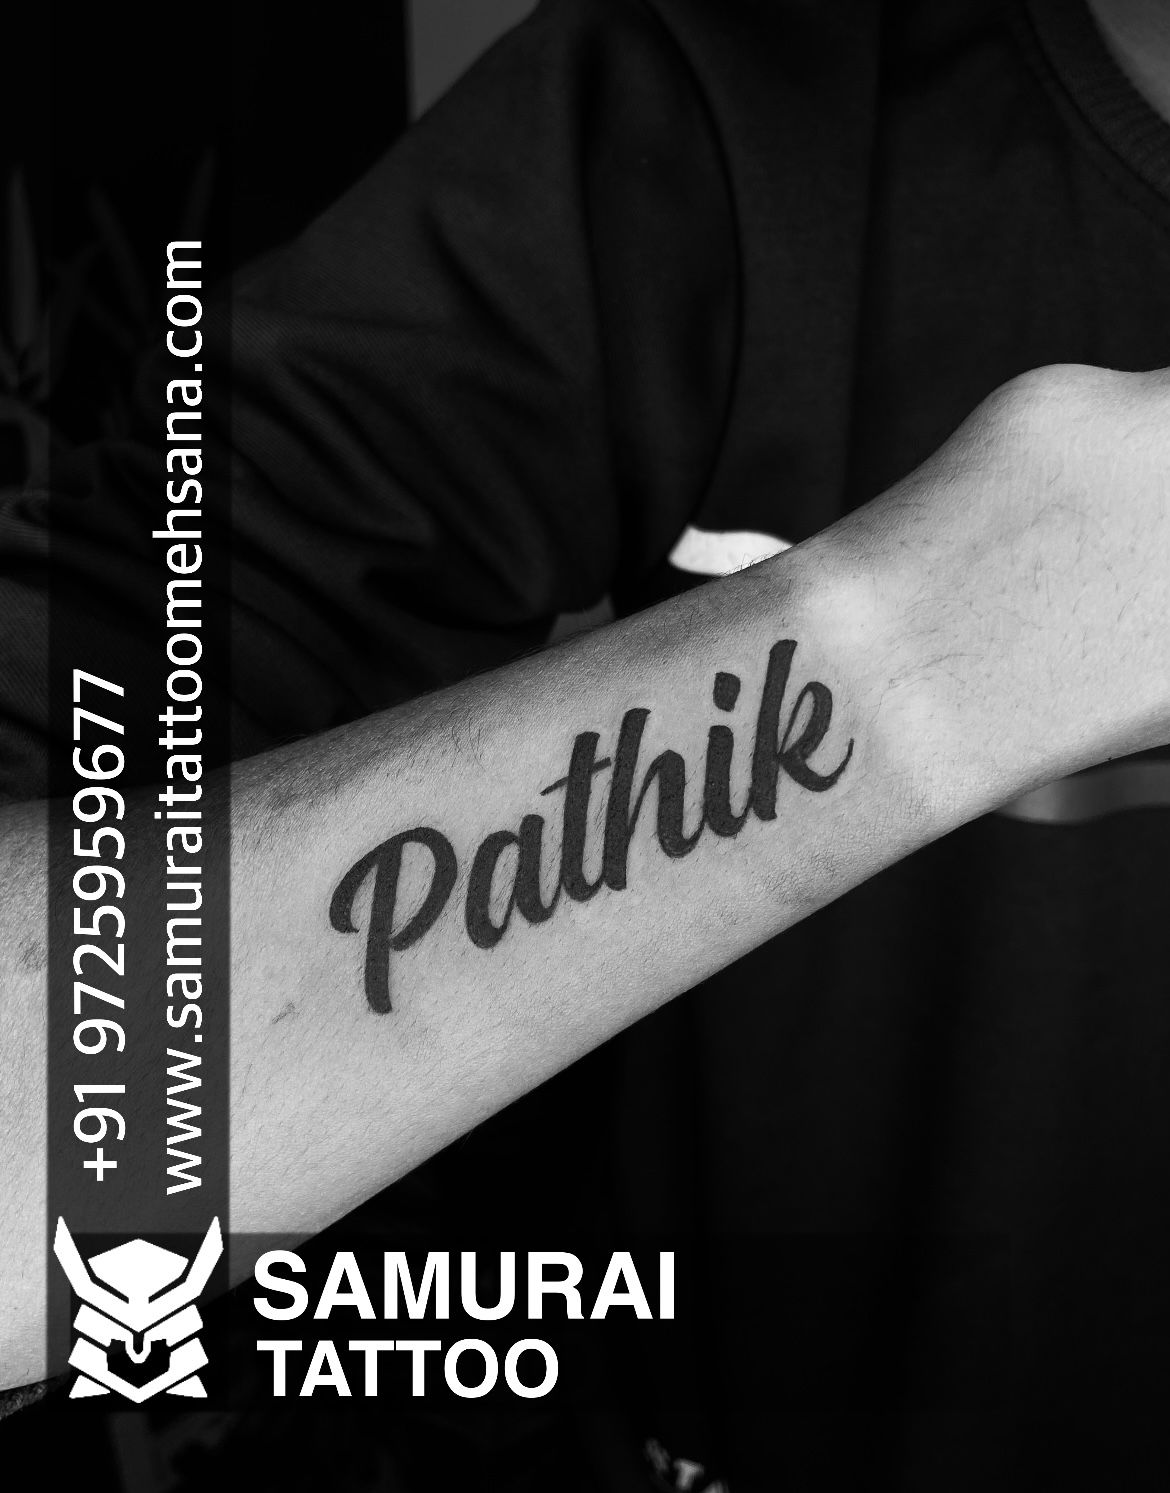 my first tattoo || tattoo art || ranjeet arts pamgarh - YouTube